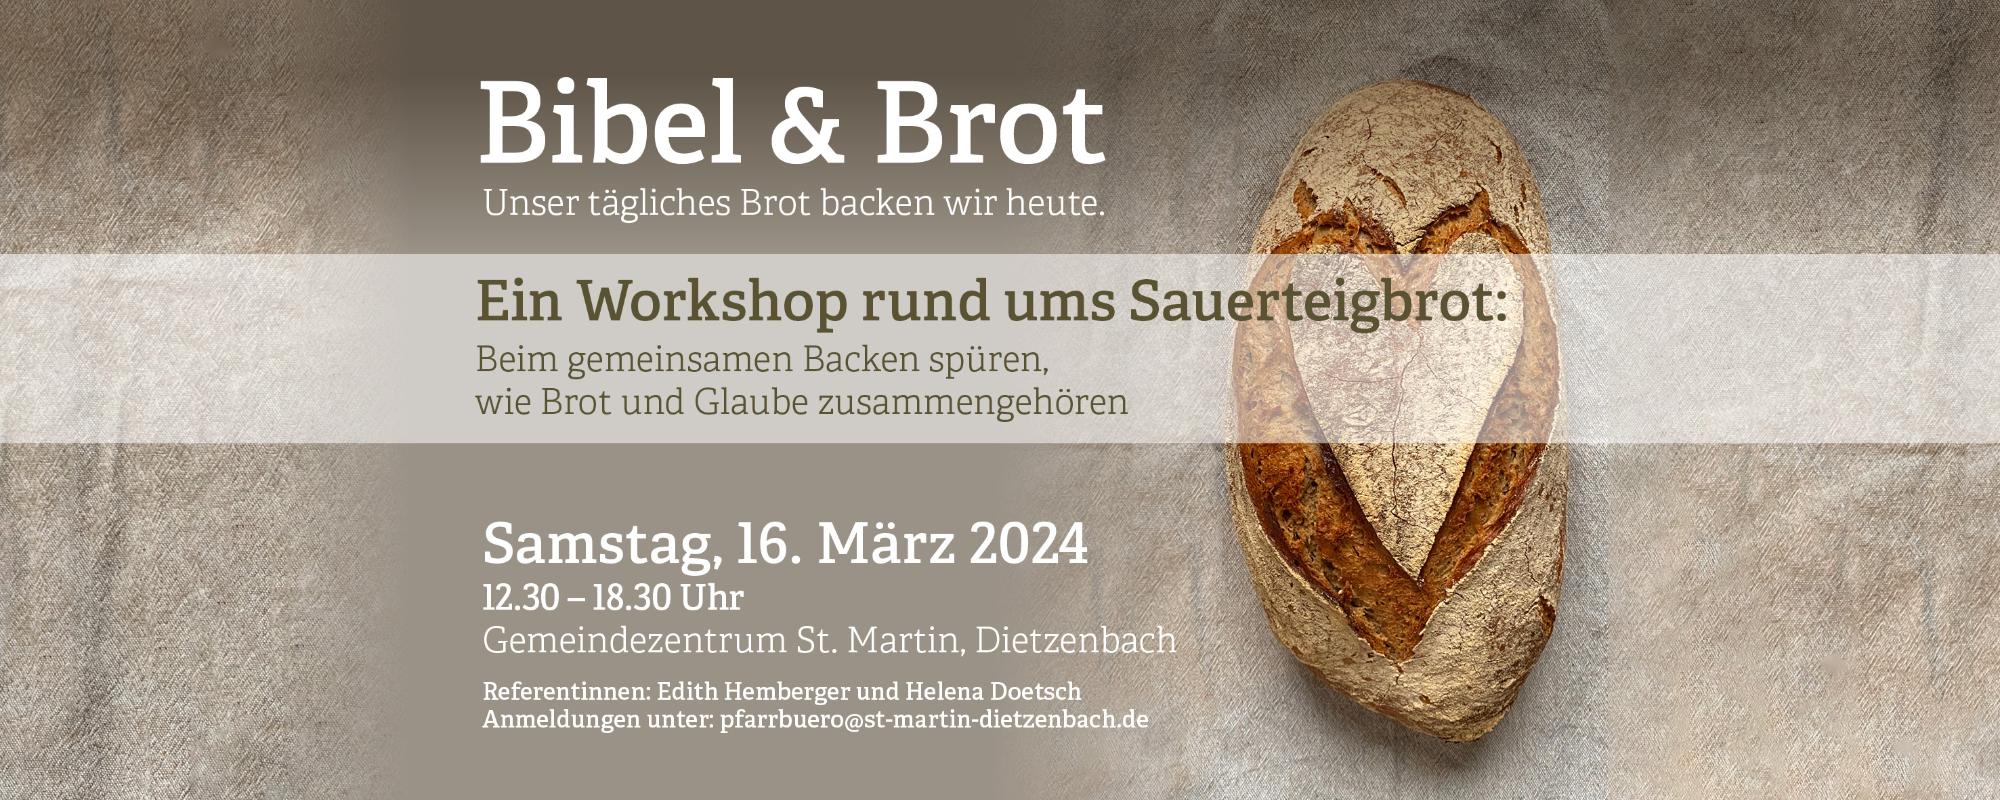 Workshop_Bibel & Brot